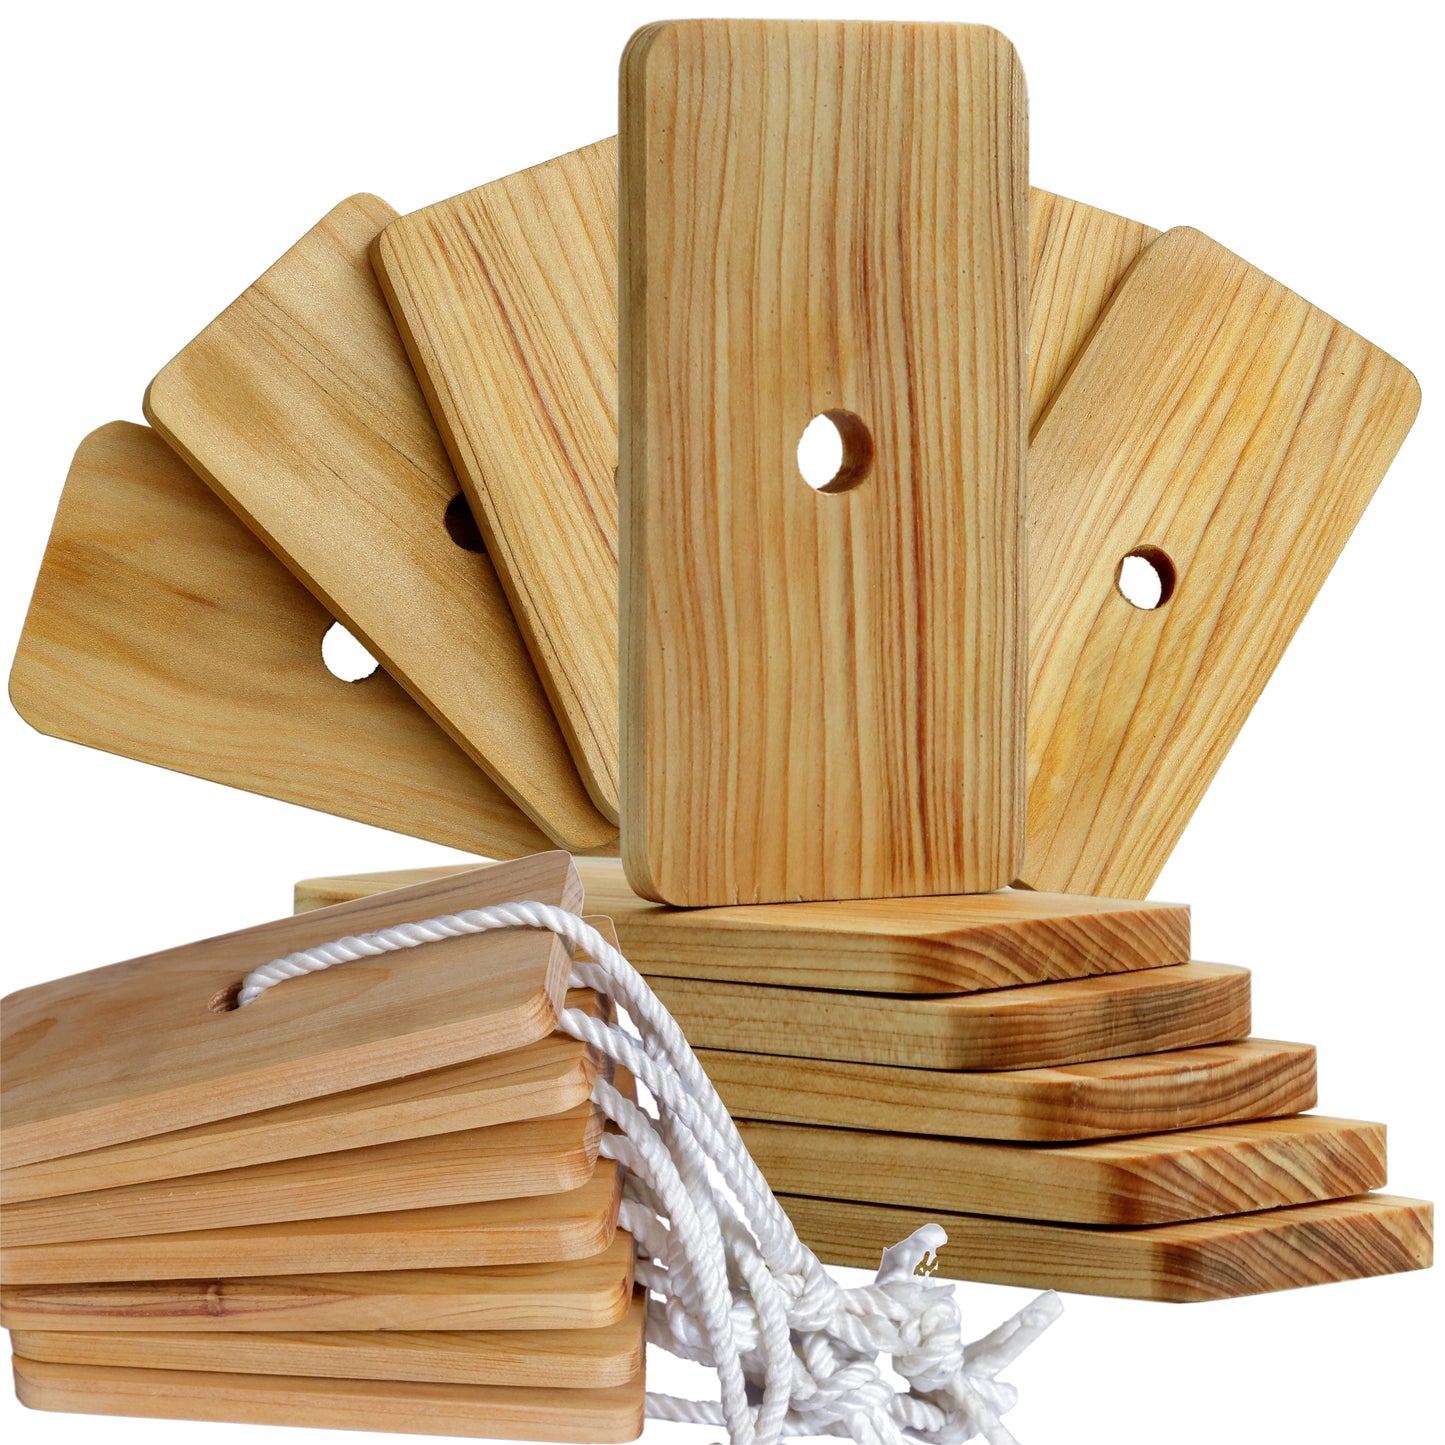 BLOOMAX® Original Natural Cedar Wood Blocks & Cedar Wood Chips Sachets (  Bag )Moth Repellent I Aromatic Cedar Blocks, Clothes Protection Storage